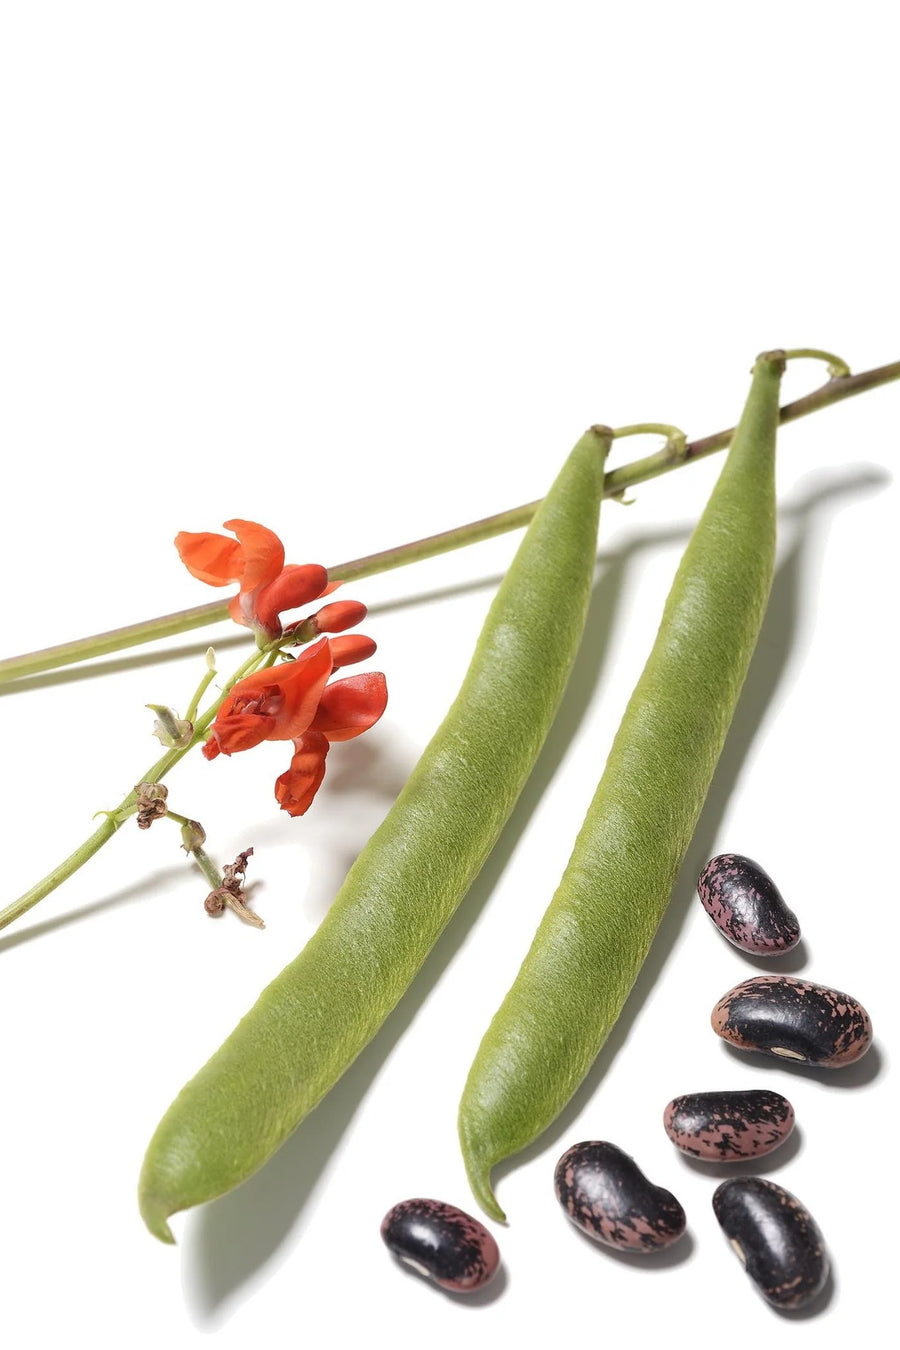 Scarlet Runner Bean - Phaseolus coccineus